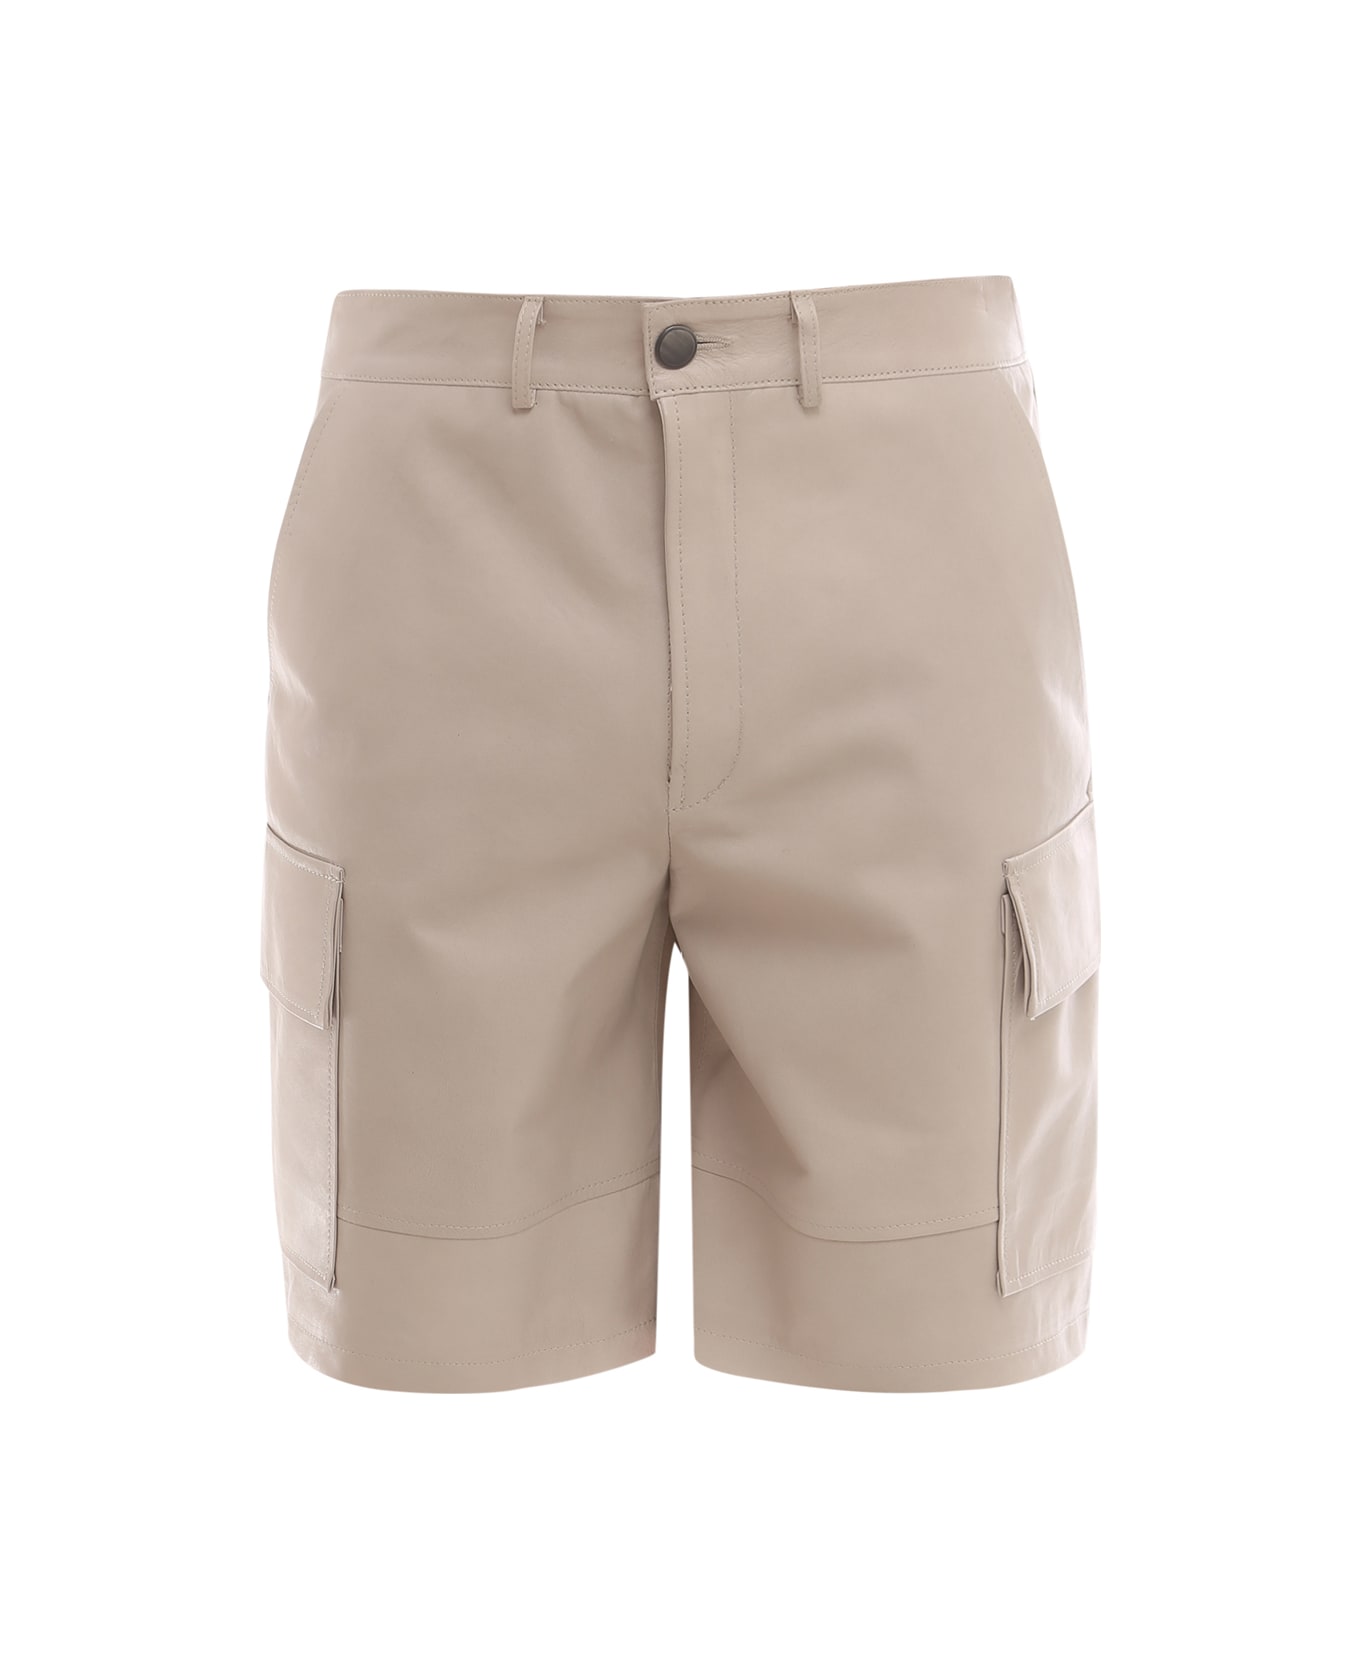 DFour Bermuda Shorts - Beige